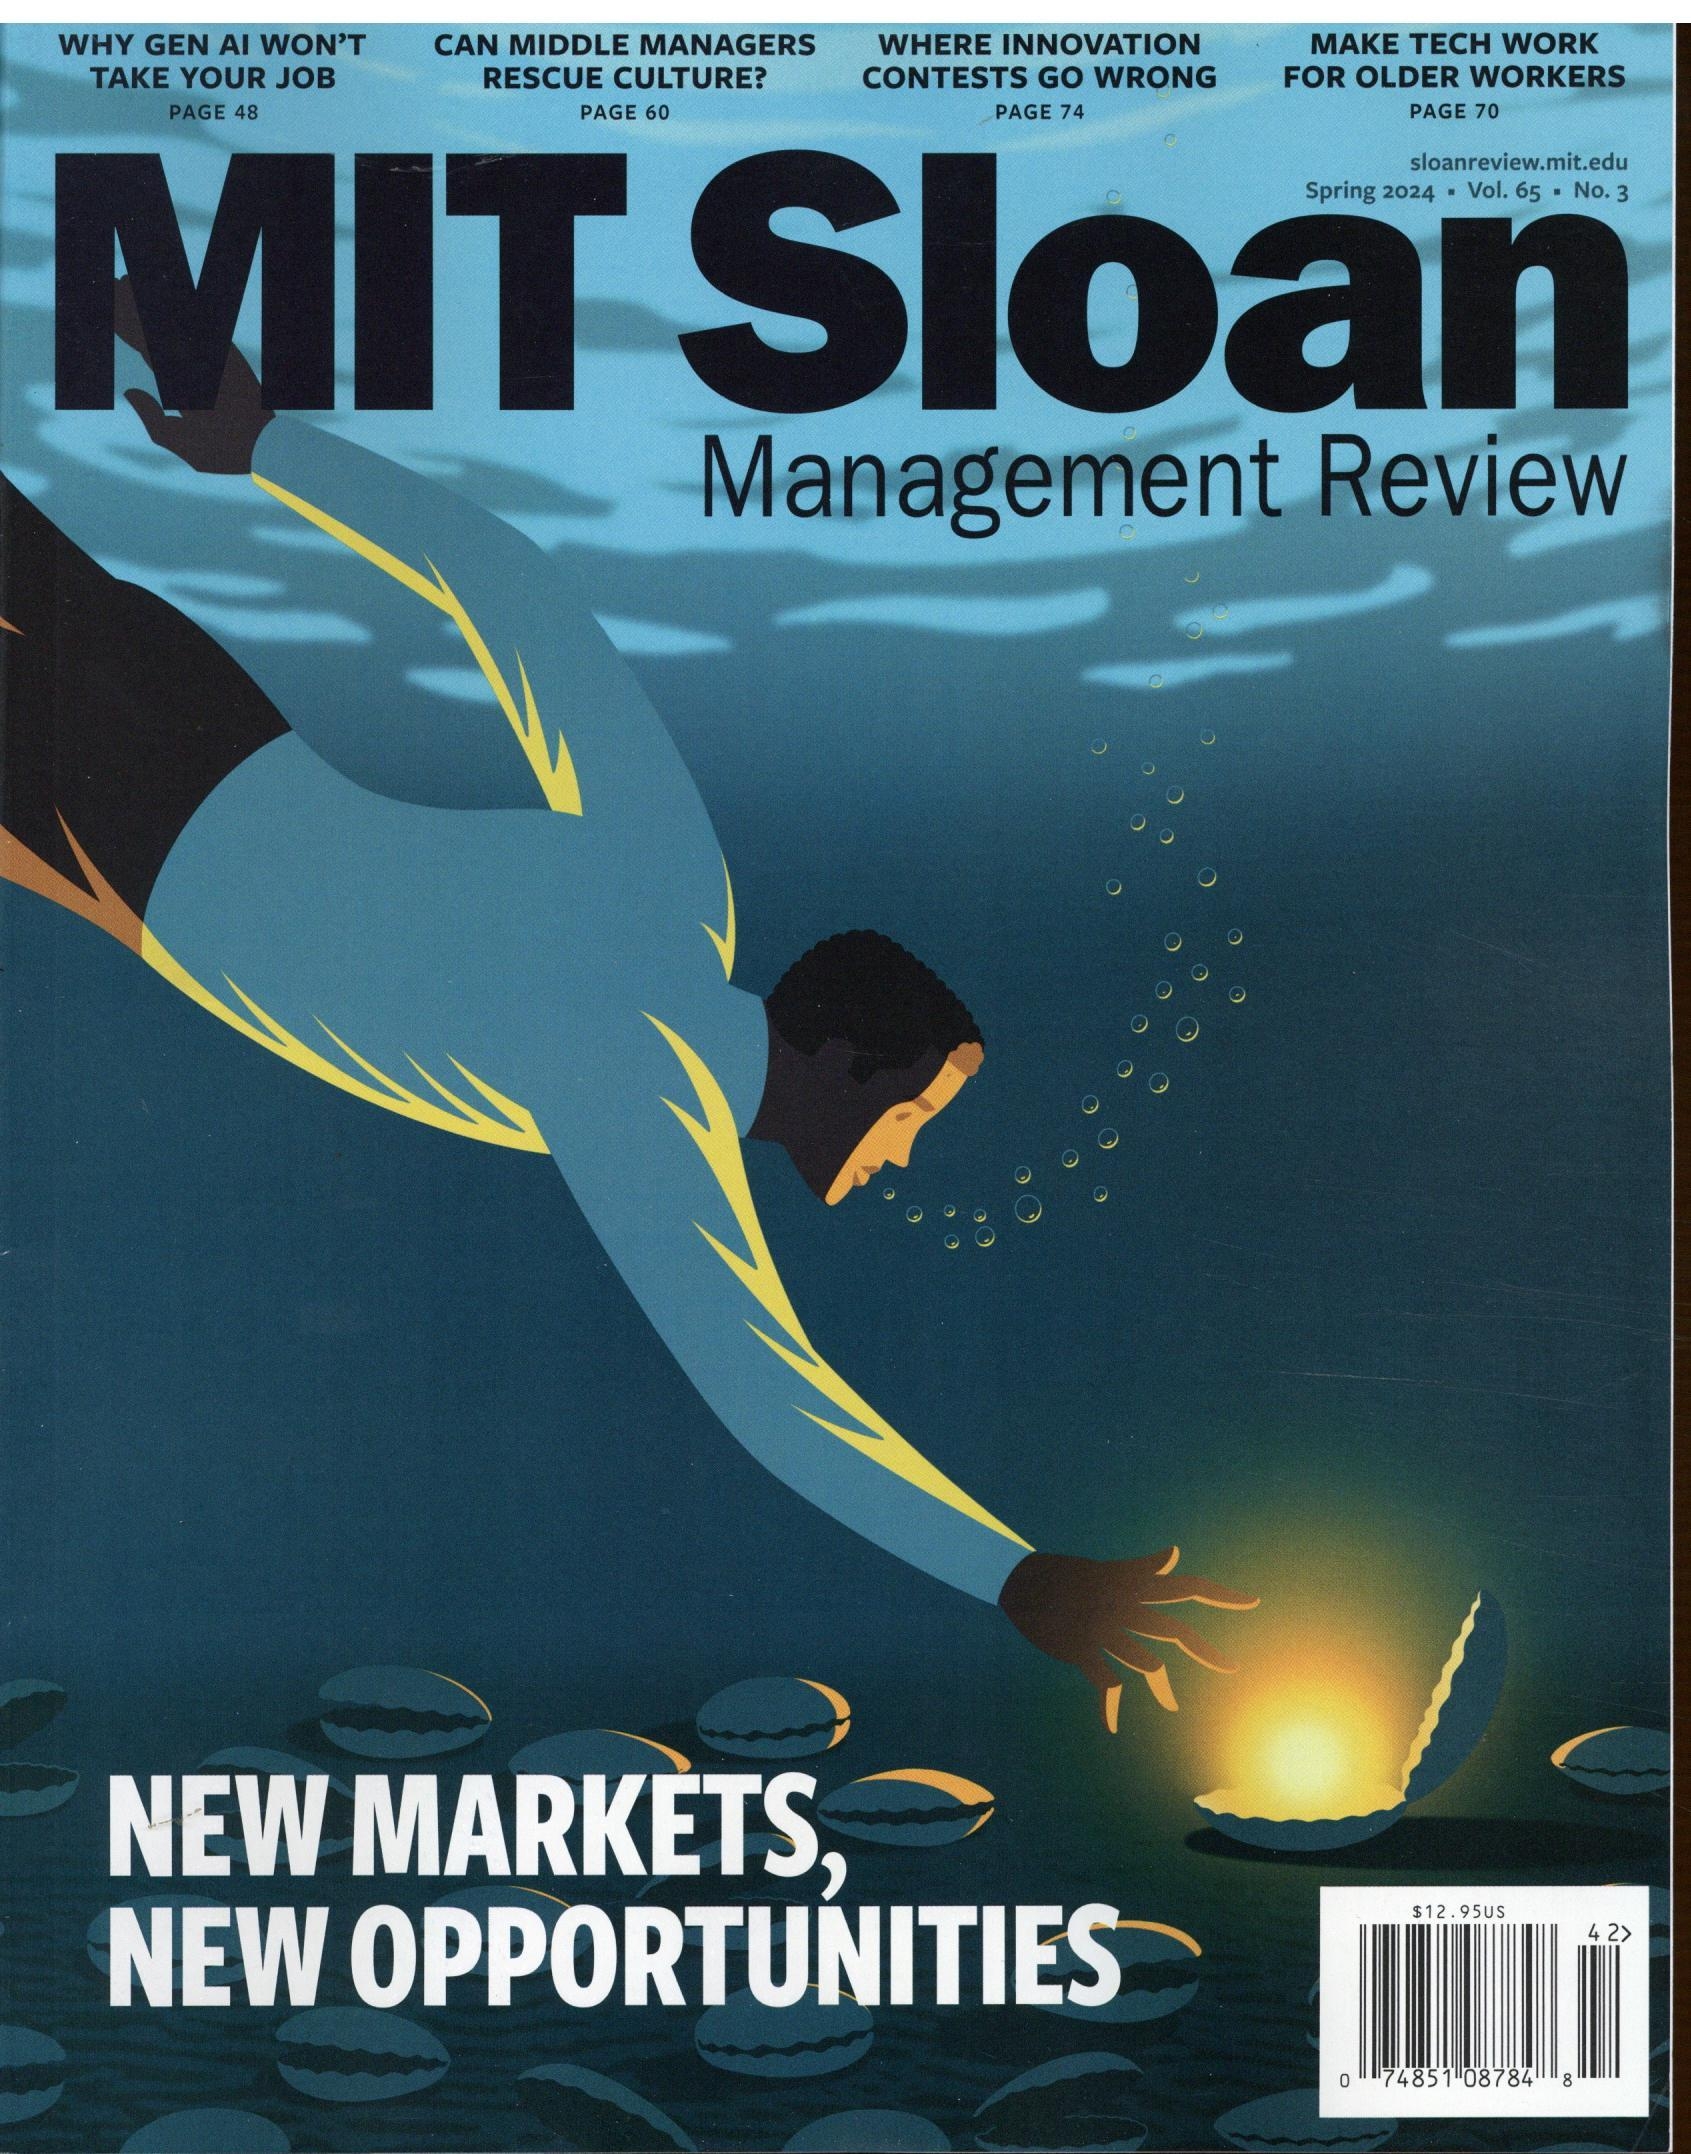 MIT Sloan Management Rev